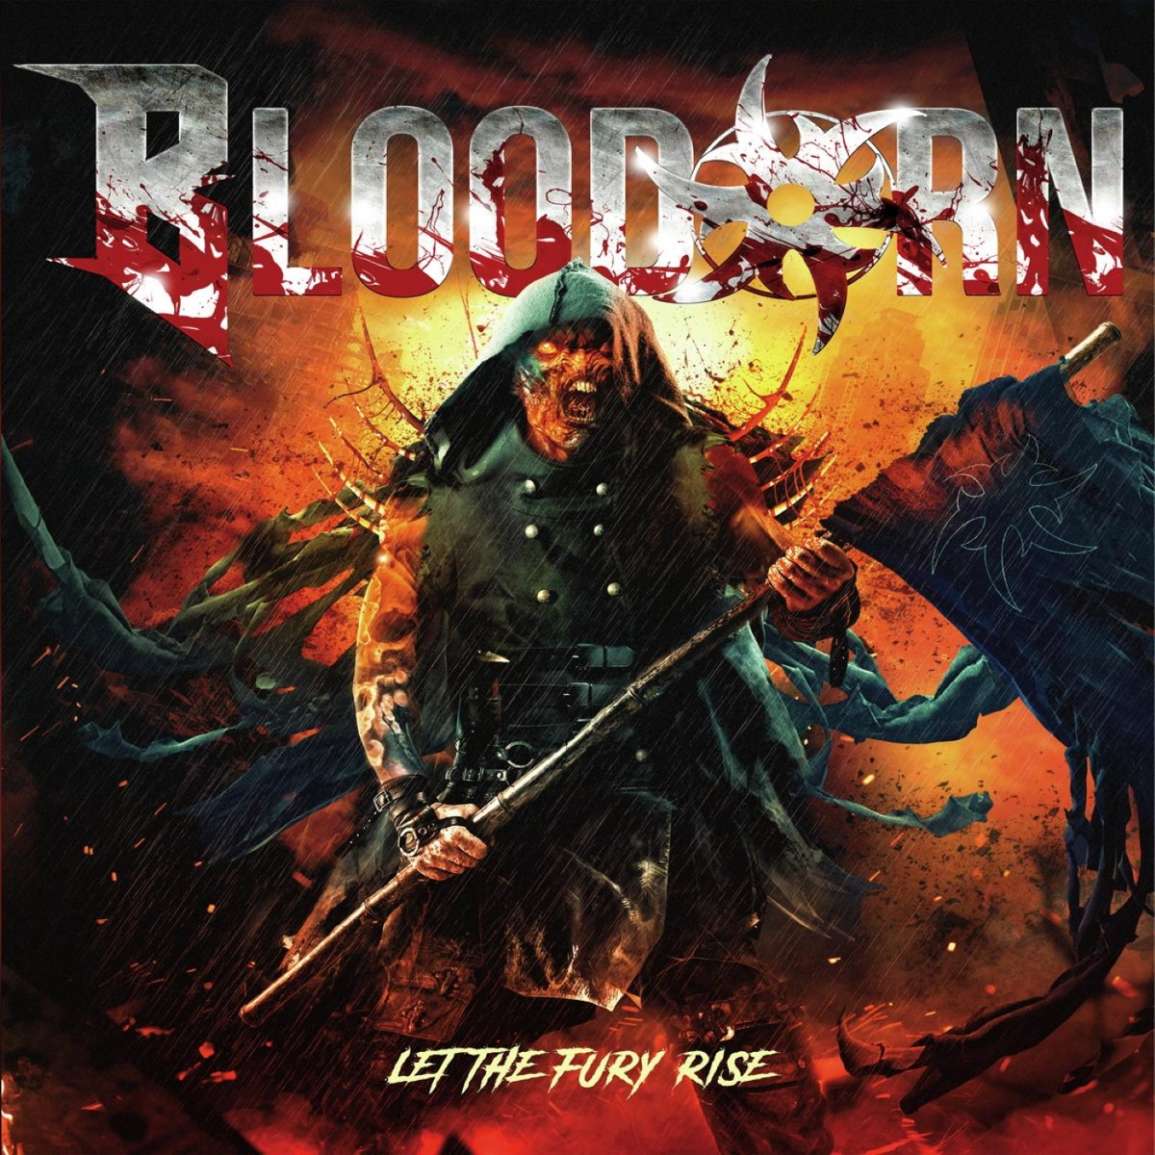 Bloodorn "Let The Fury Rise" Digipak CD - PRE-ORDER